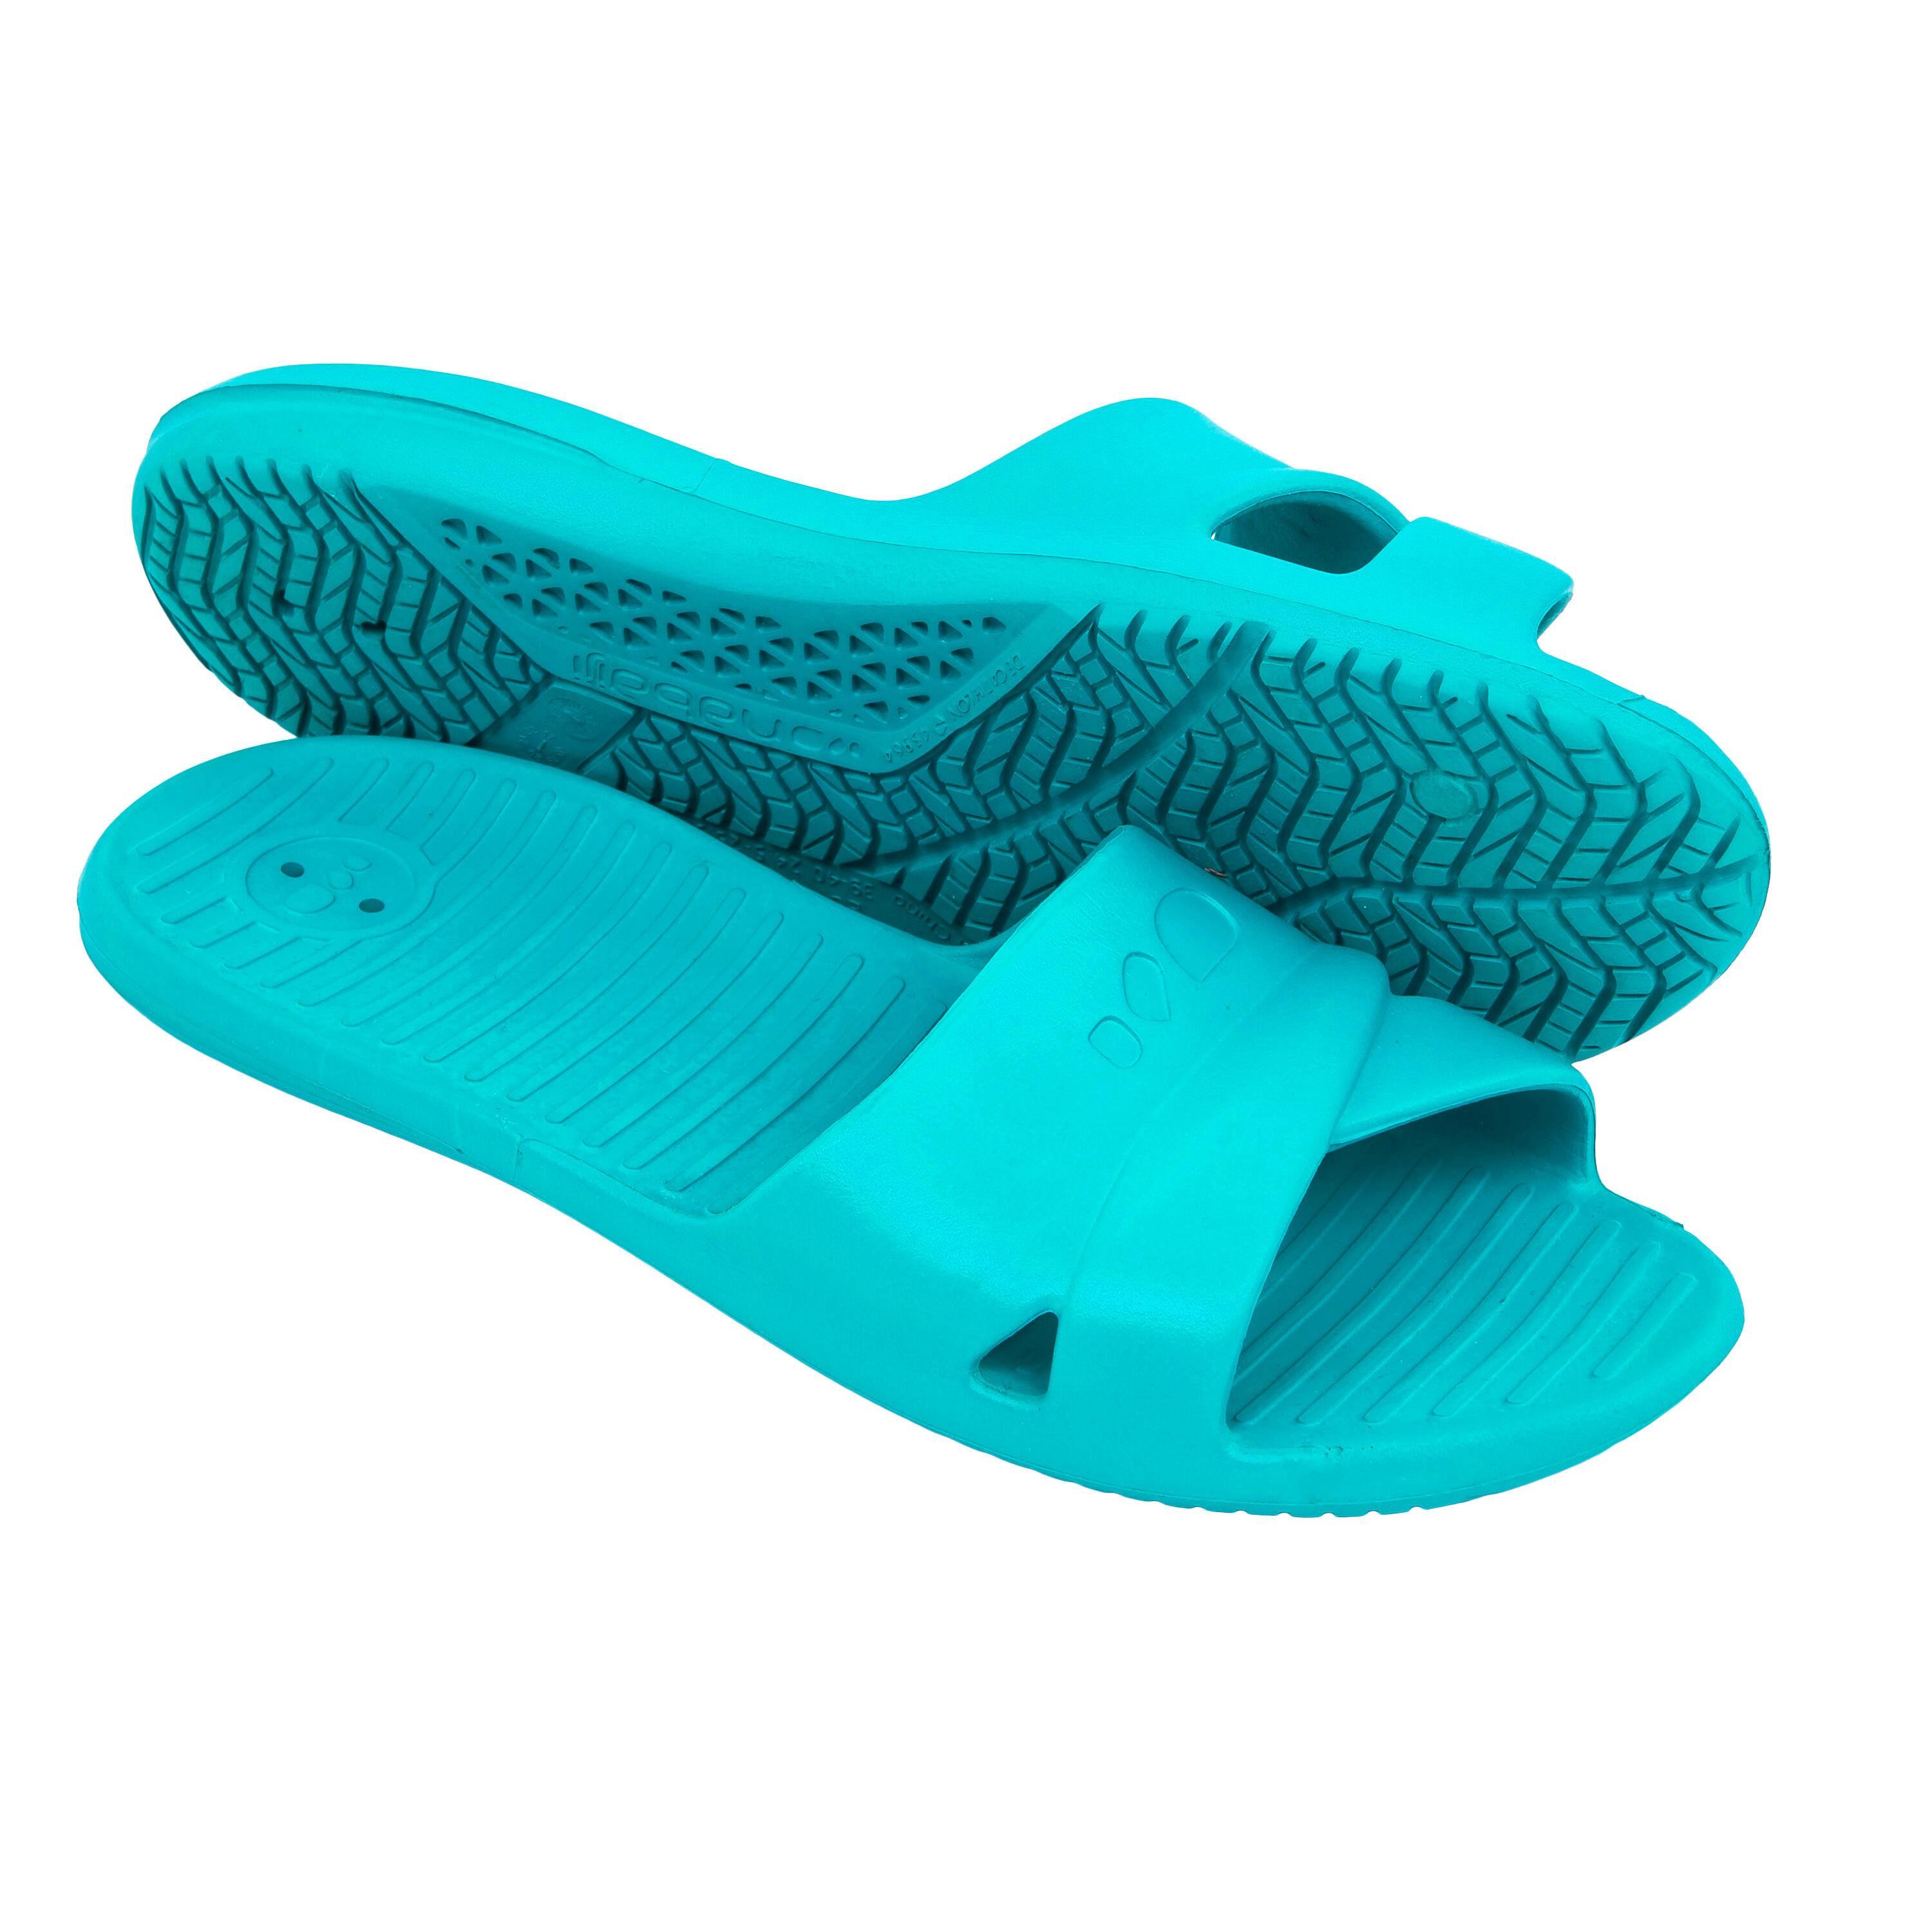 Share more than 79 decathlon swimming slippers latest - dedaotaonec